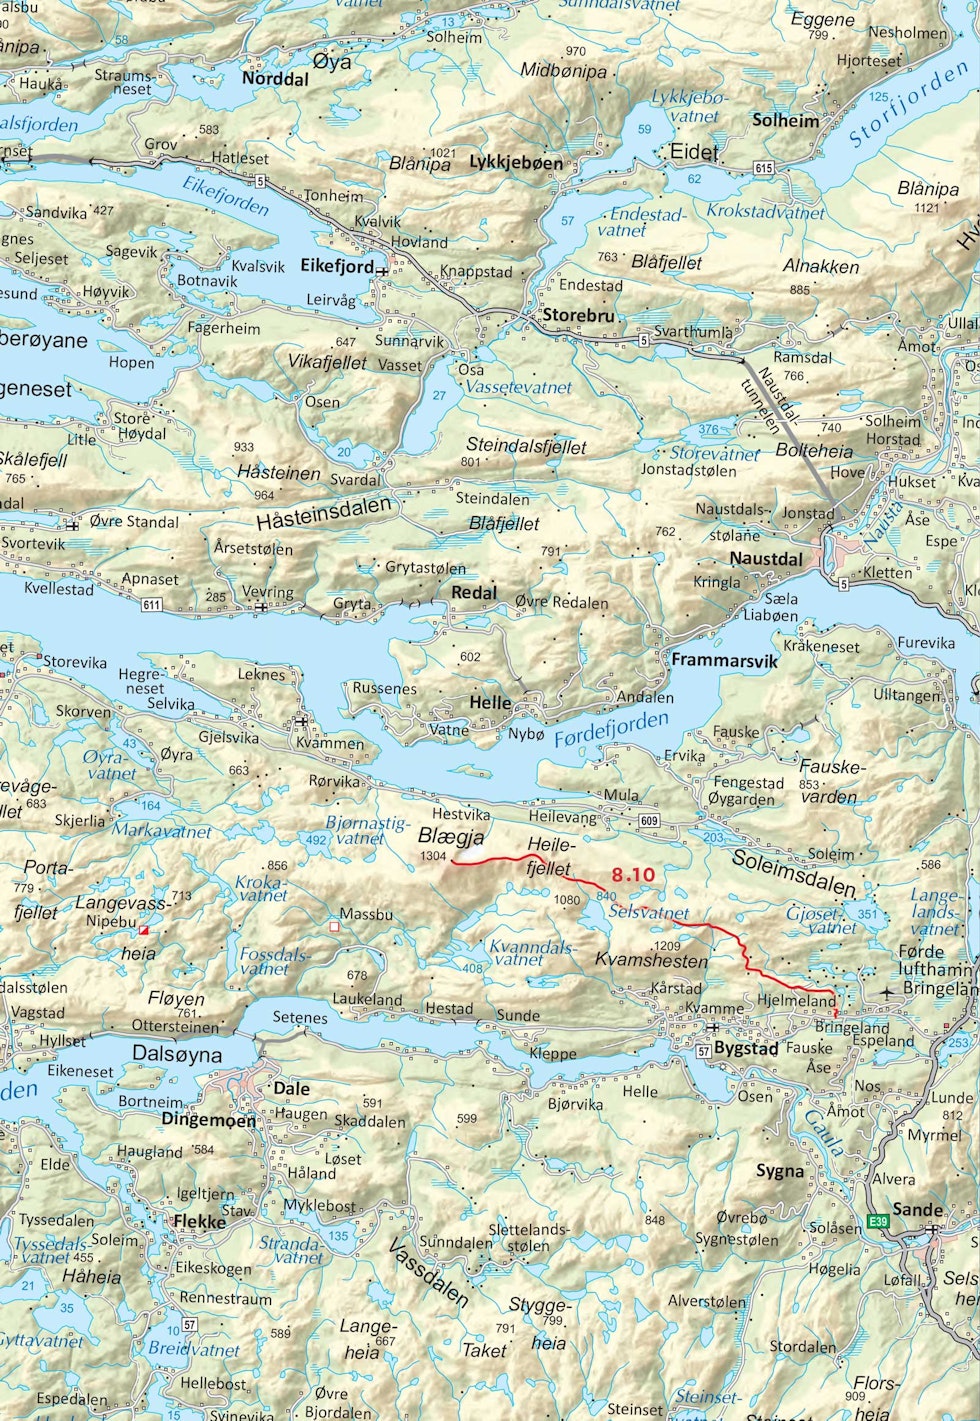 Oversiktskart over Fjellskiturar i Sunnfjord. Frå Toppturar i Sunnfjord.